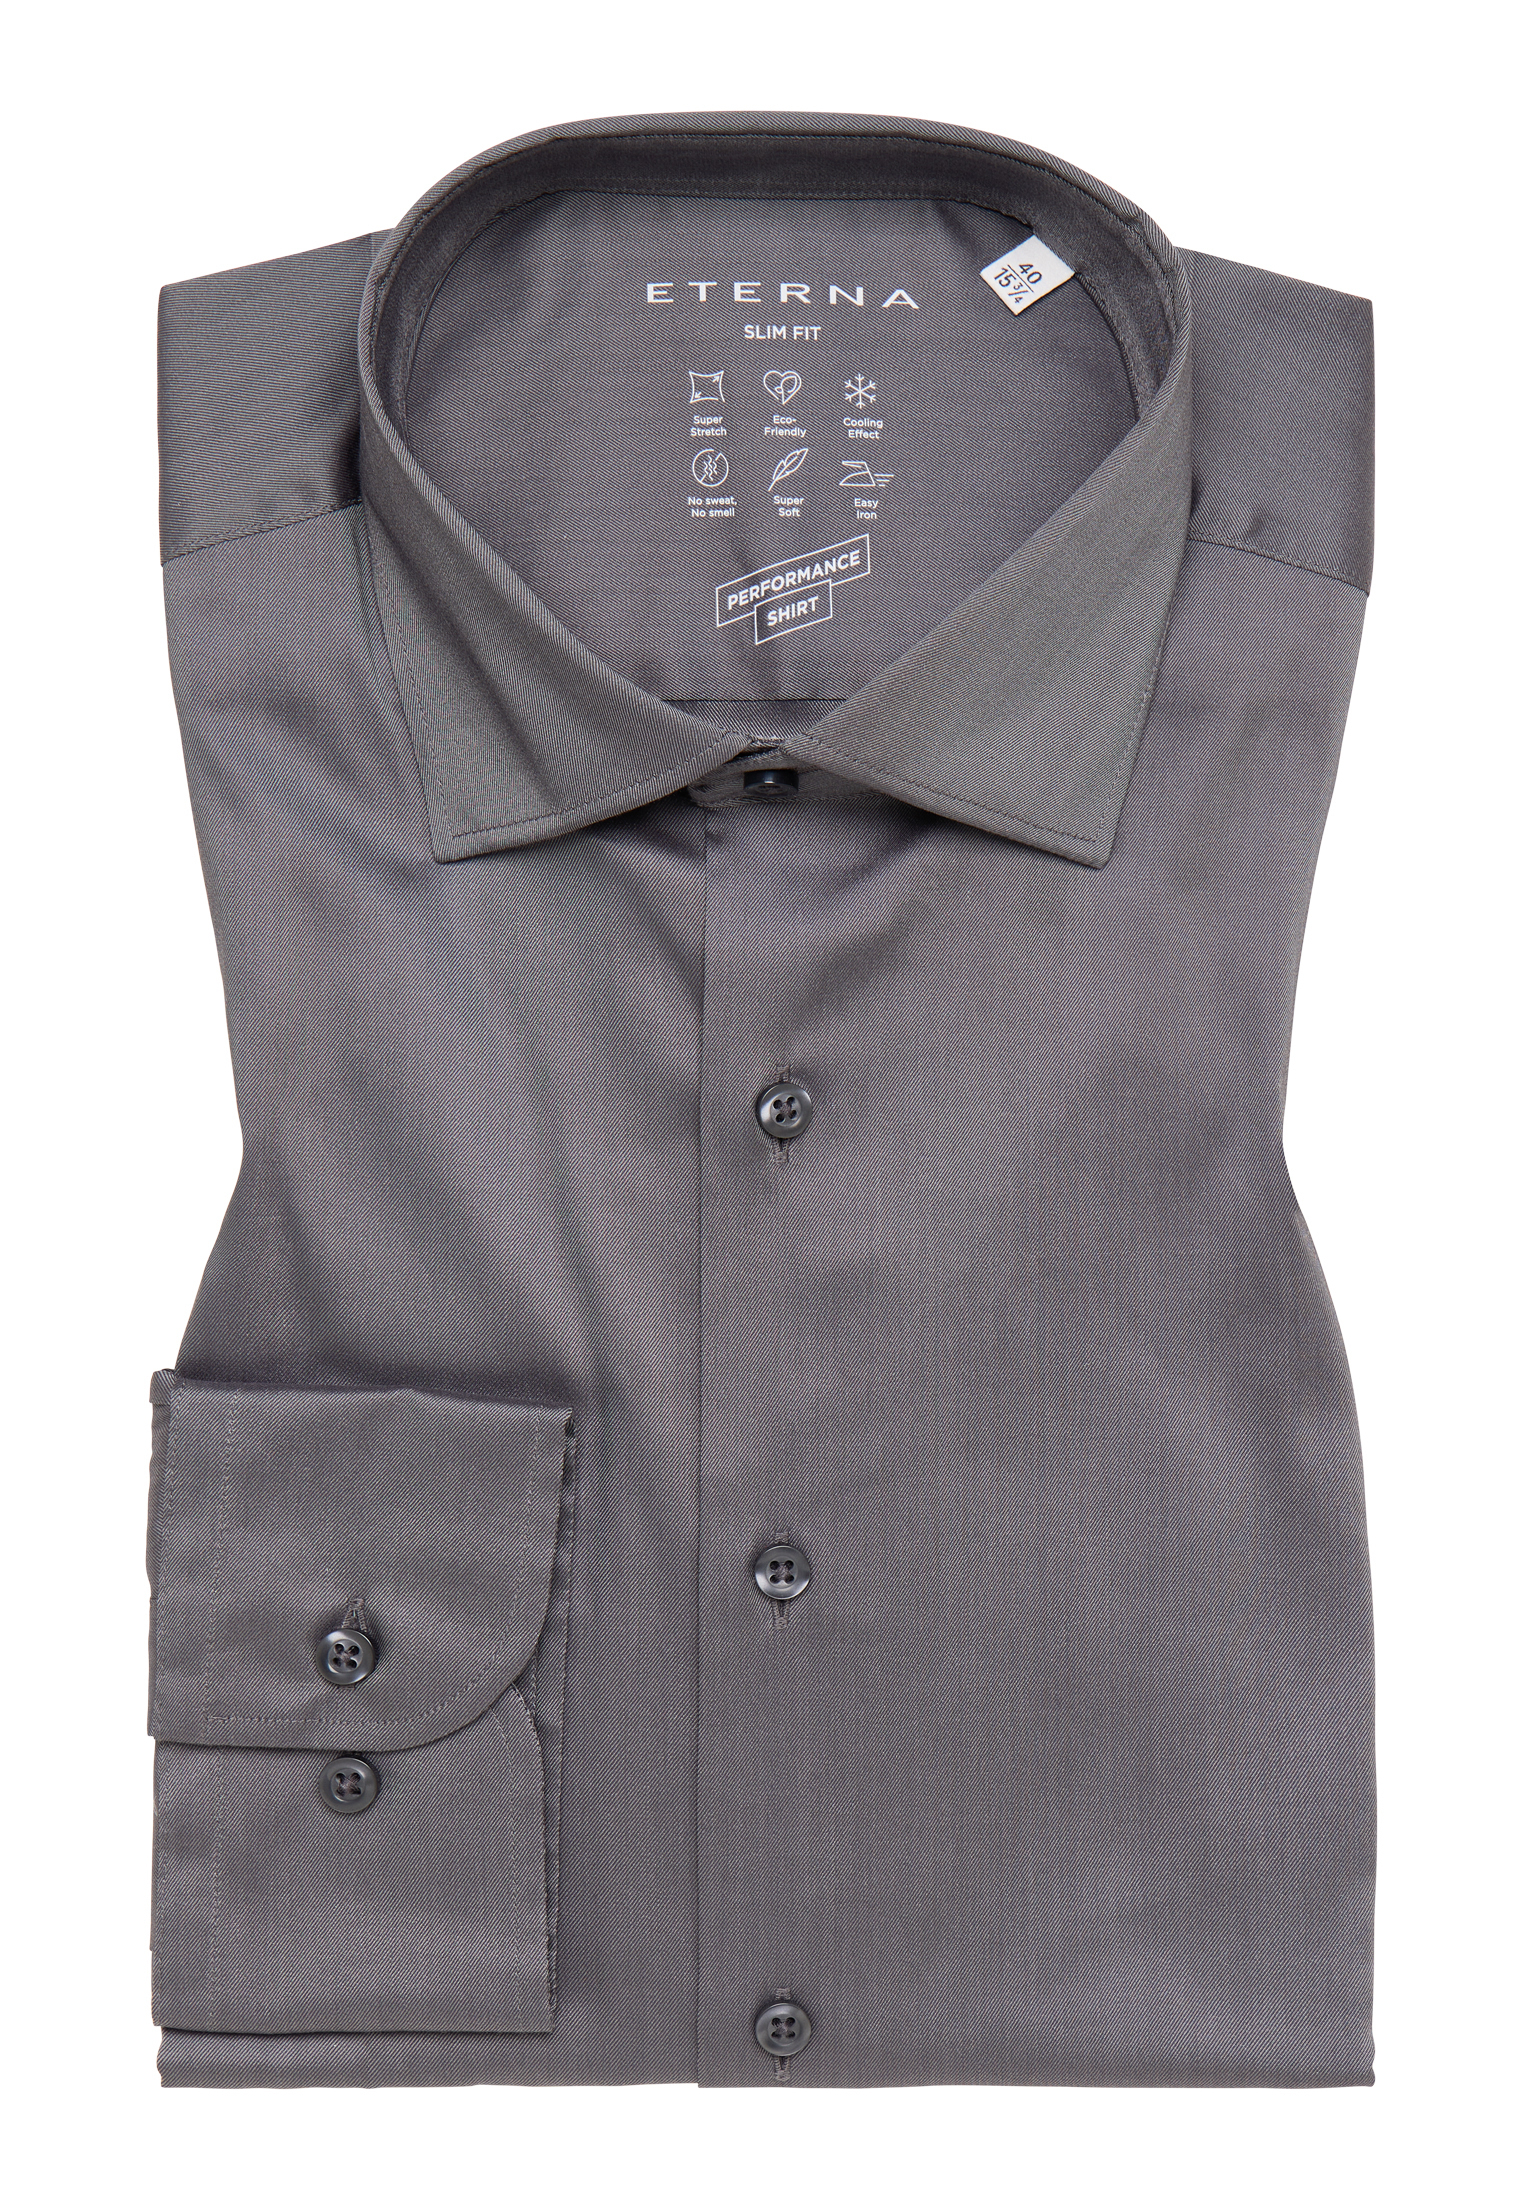 SLIM FIT Performance Shirt in grau unifarben | grau | 43 | super langer Arm  (72 cm) | 1SH02217-03-01-43-72